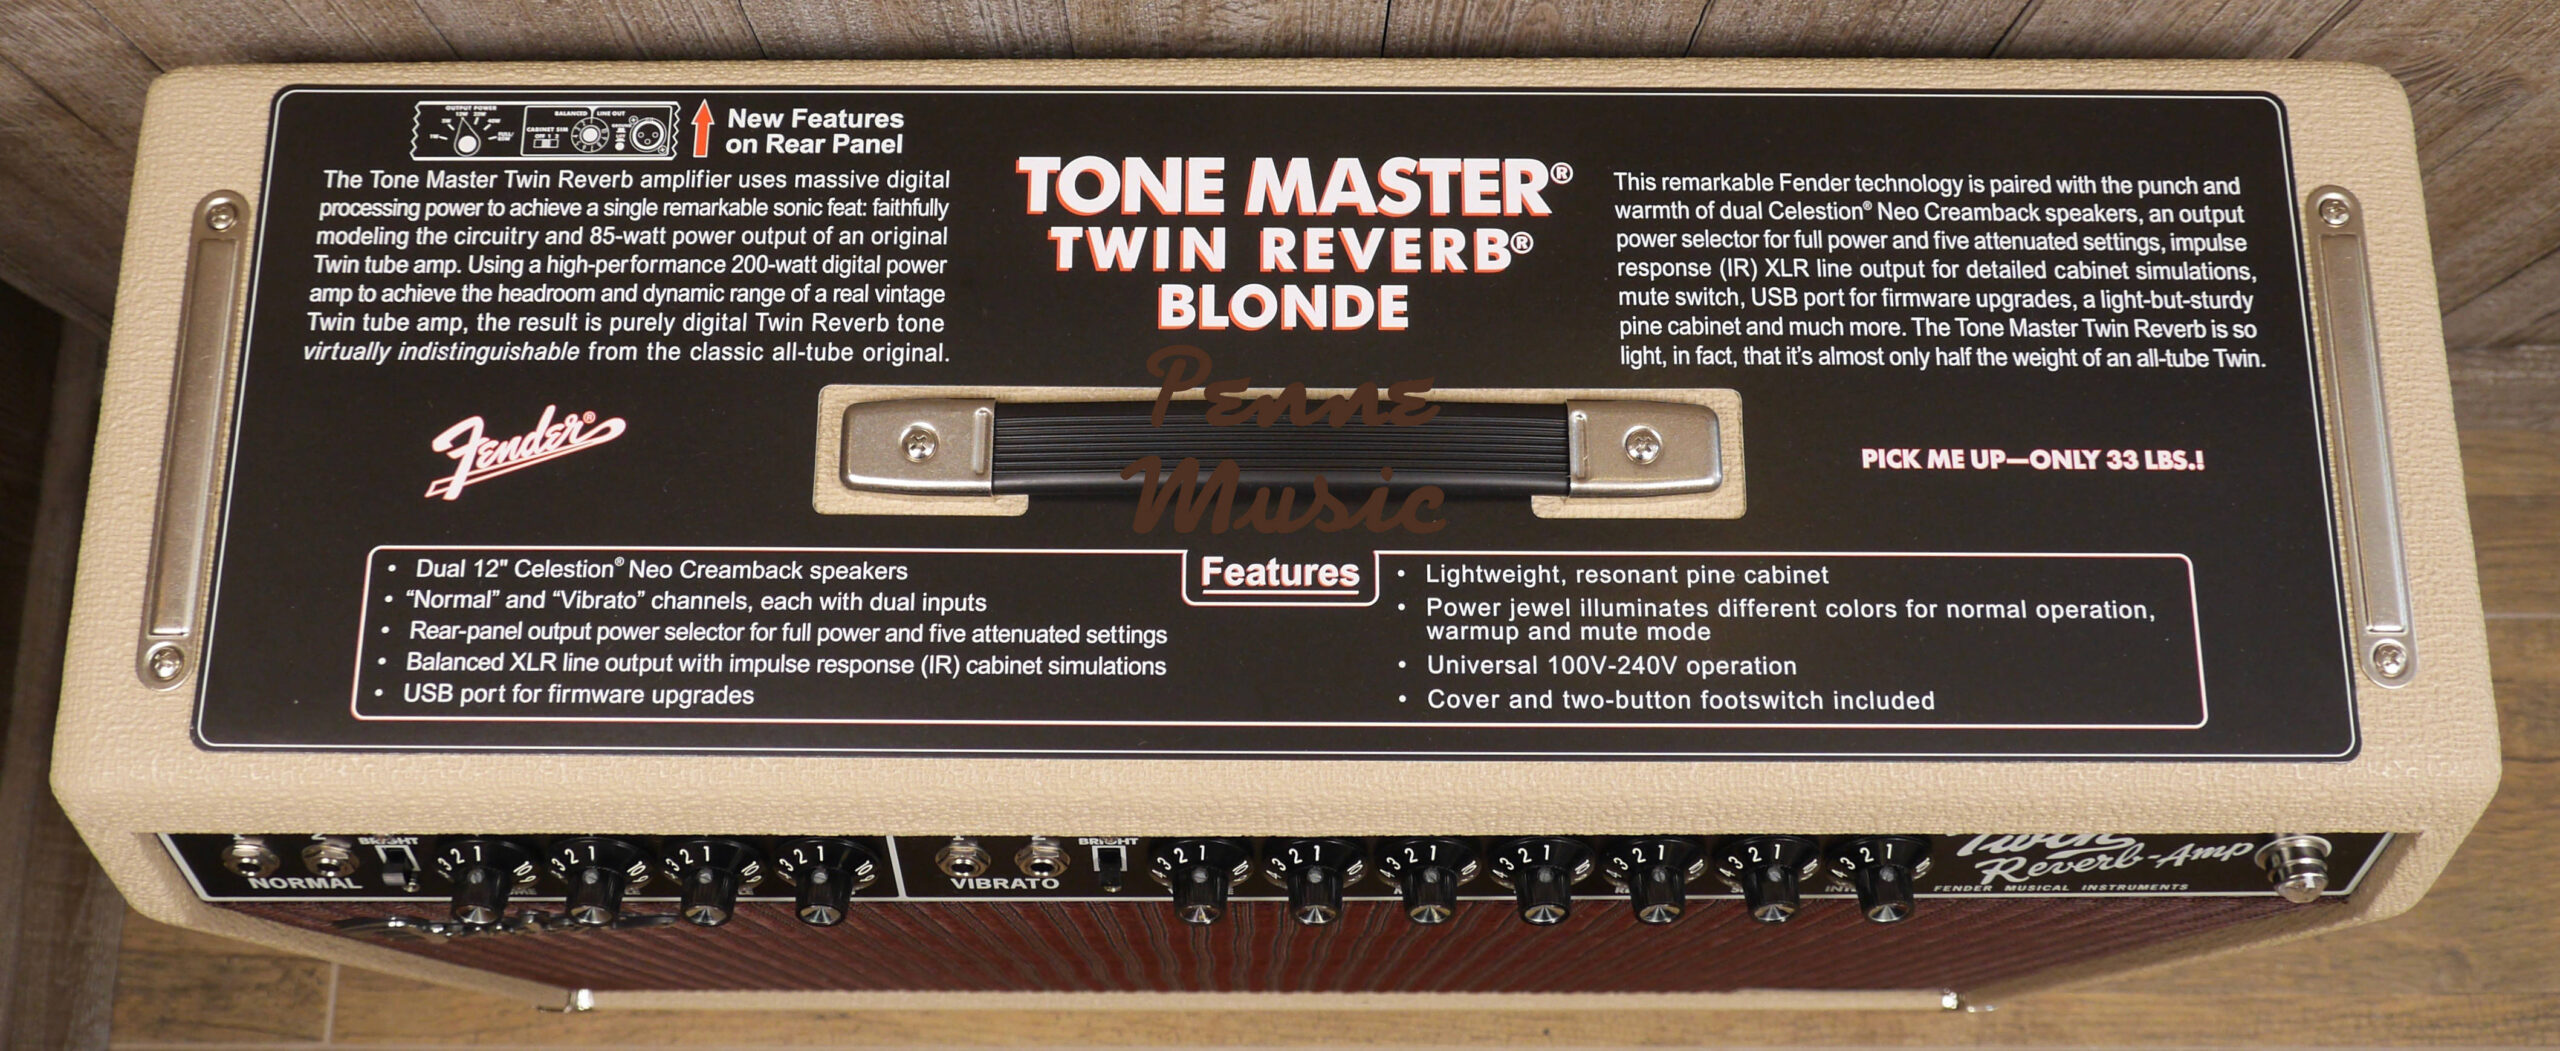 Fender Tone Master Twin Reverb Blonde 2